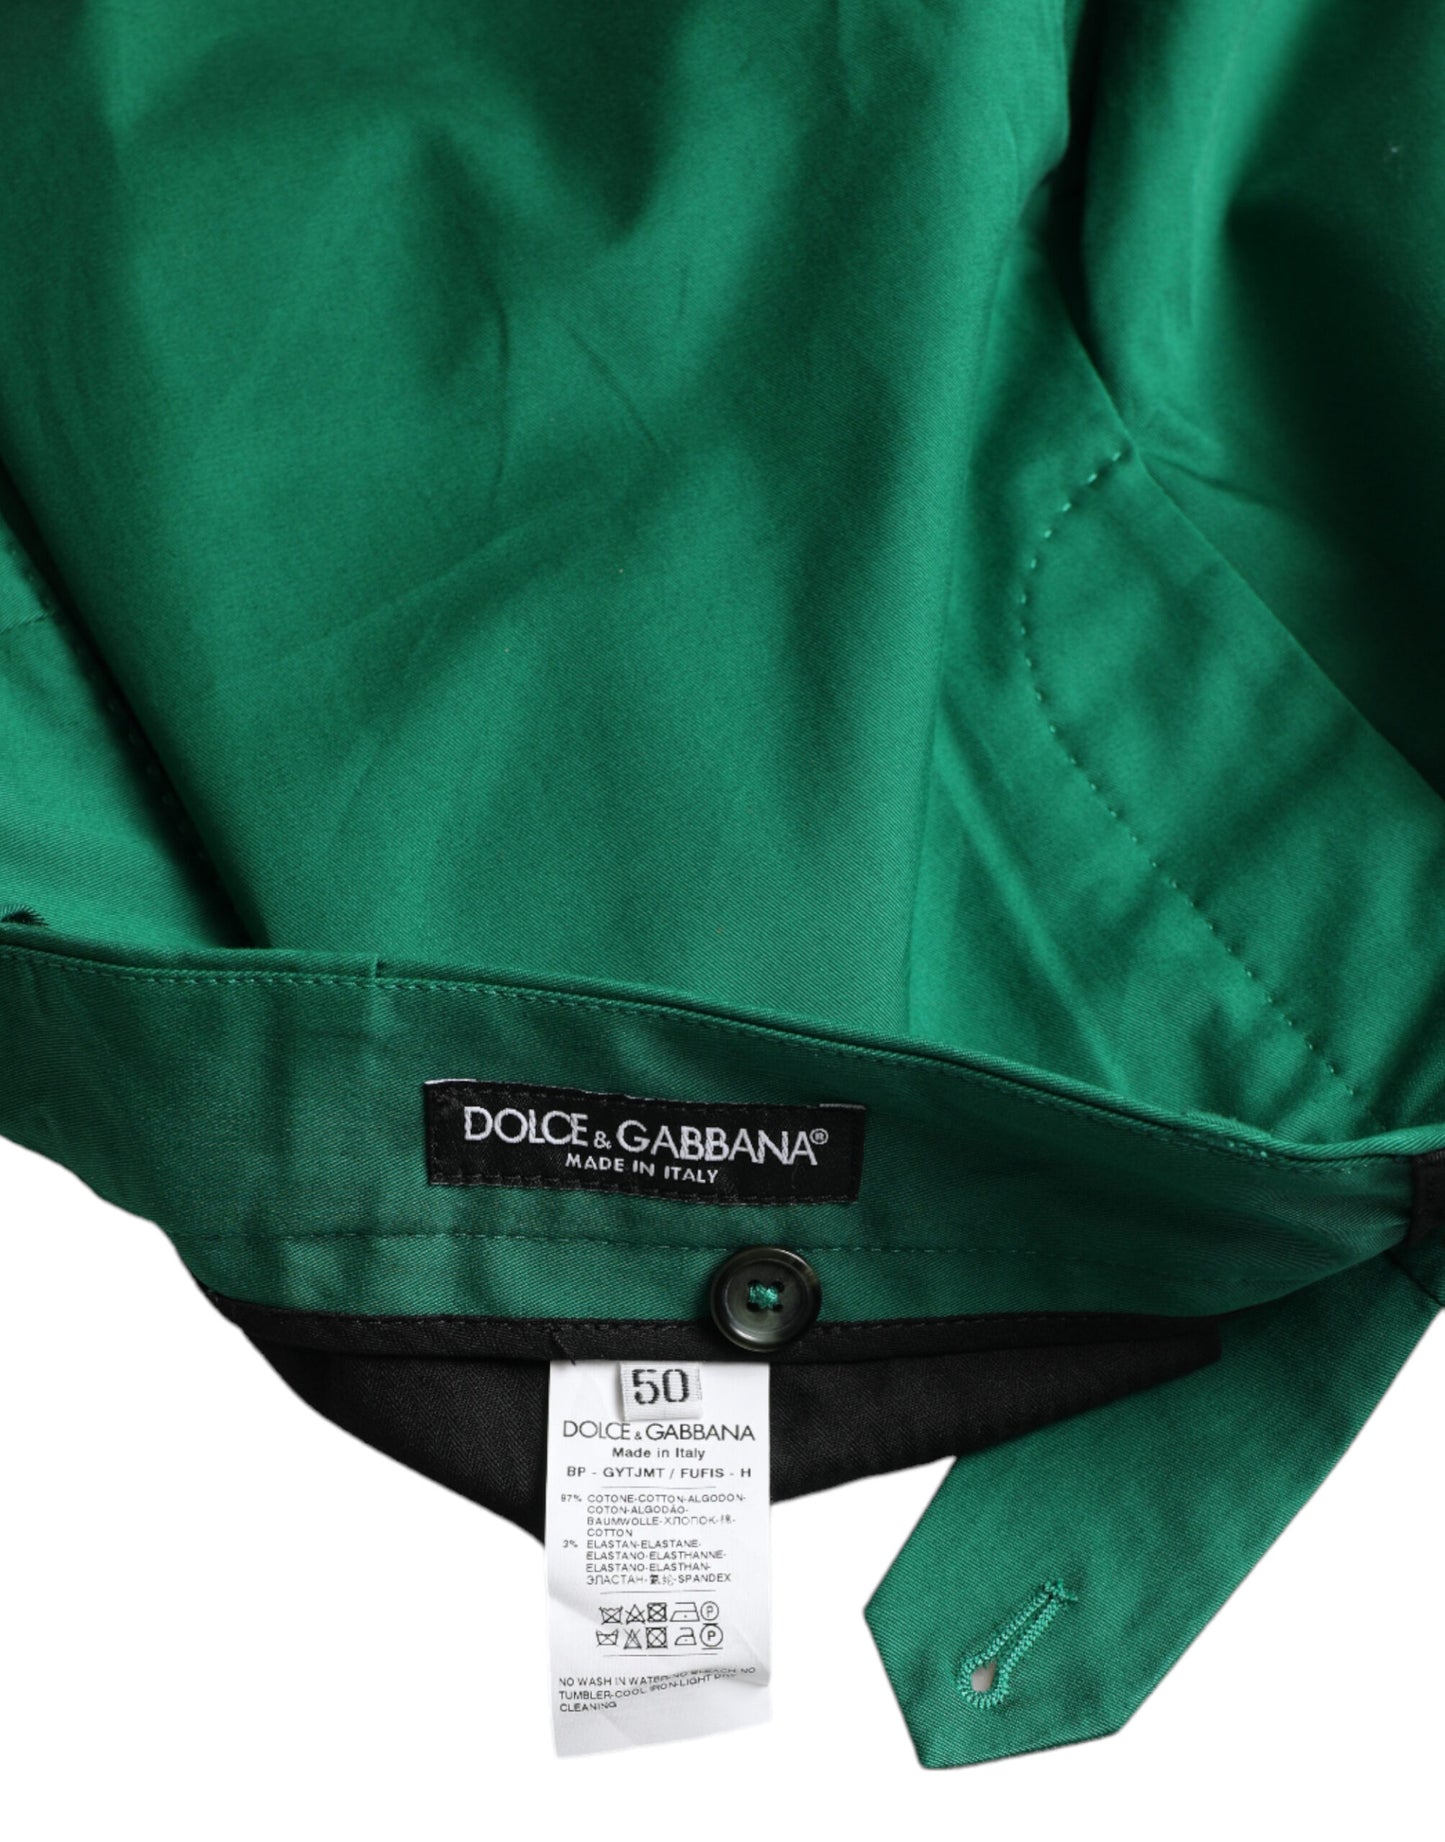 Elegant Deep Green Cotton Bermuda Shorts